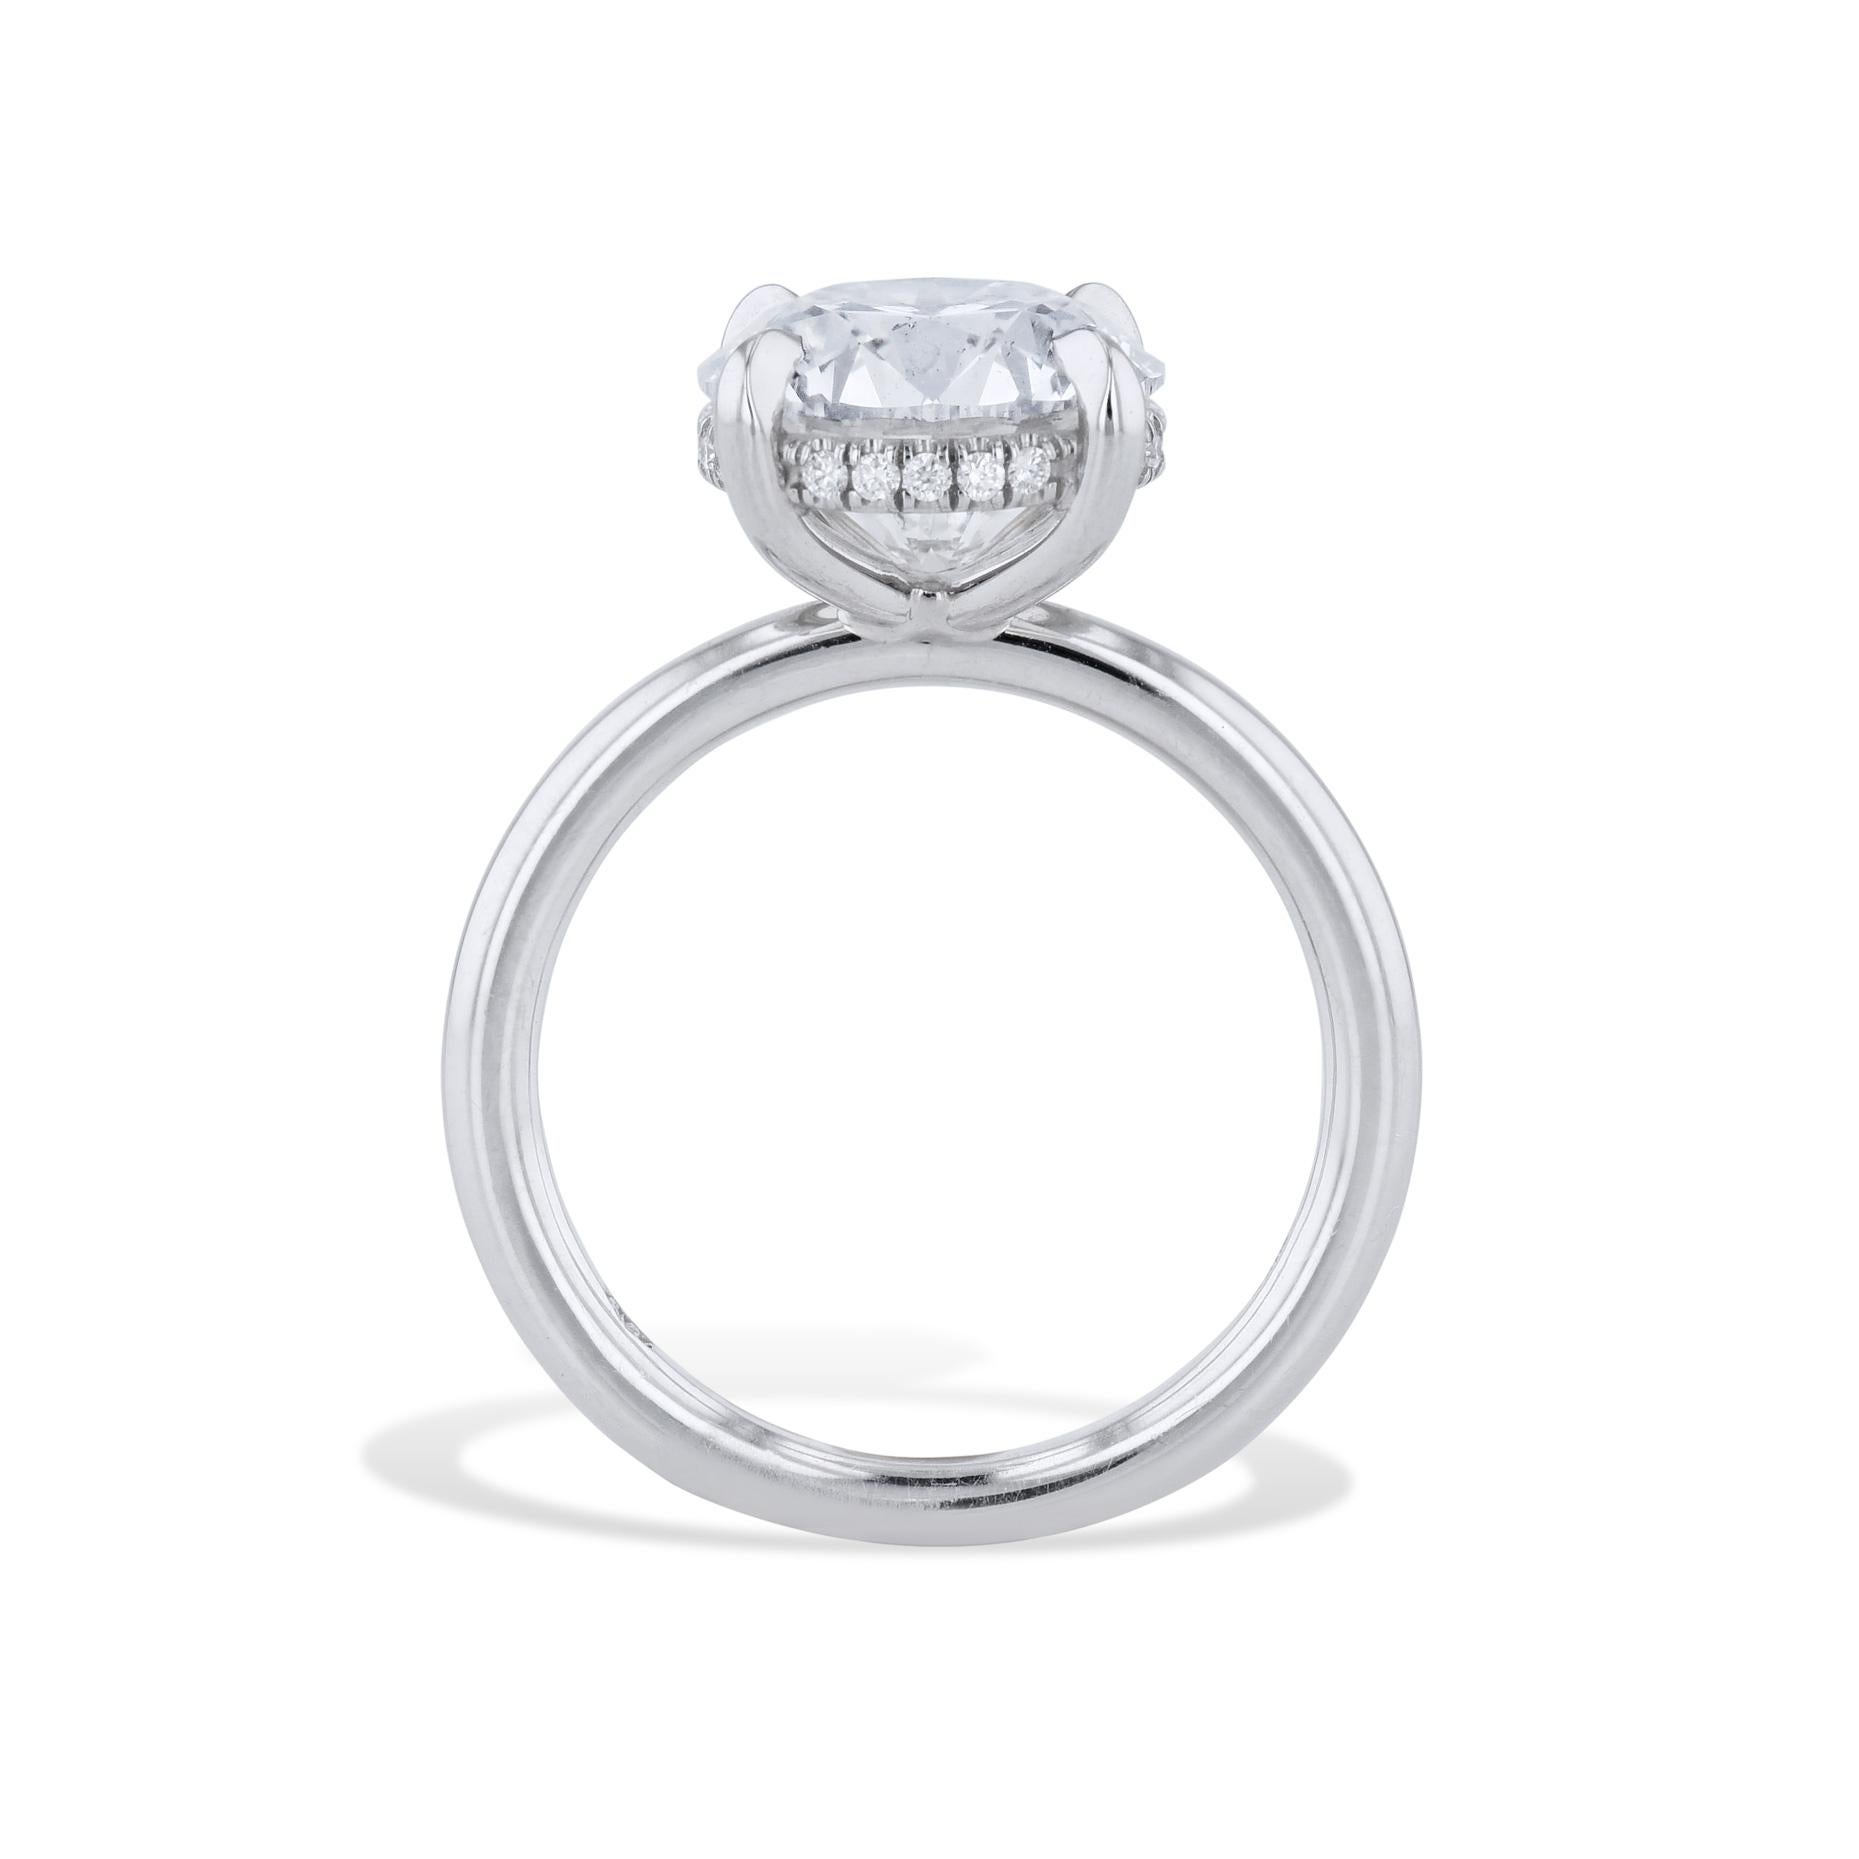 3.82 Carat Round Diamond Platinum Engagement Ring Handmade In New Condition For Sale In Miami, FL